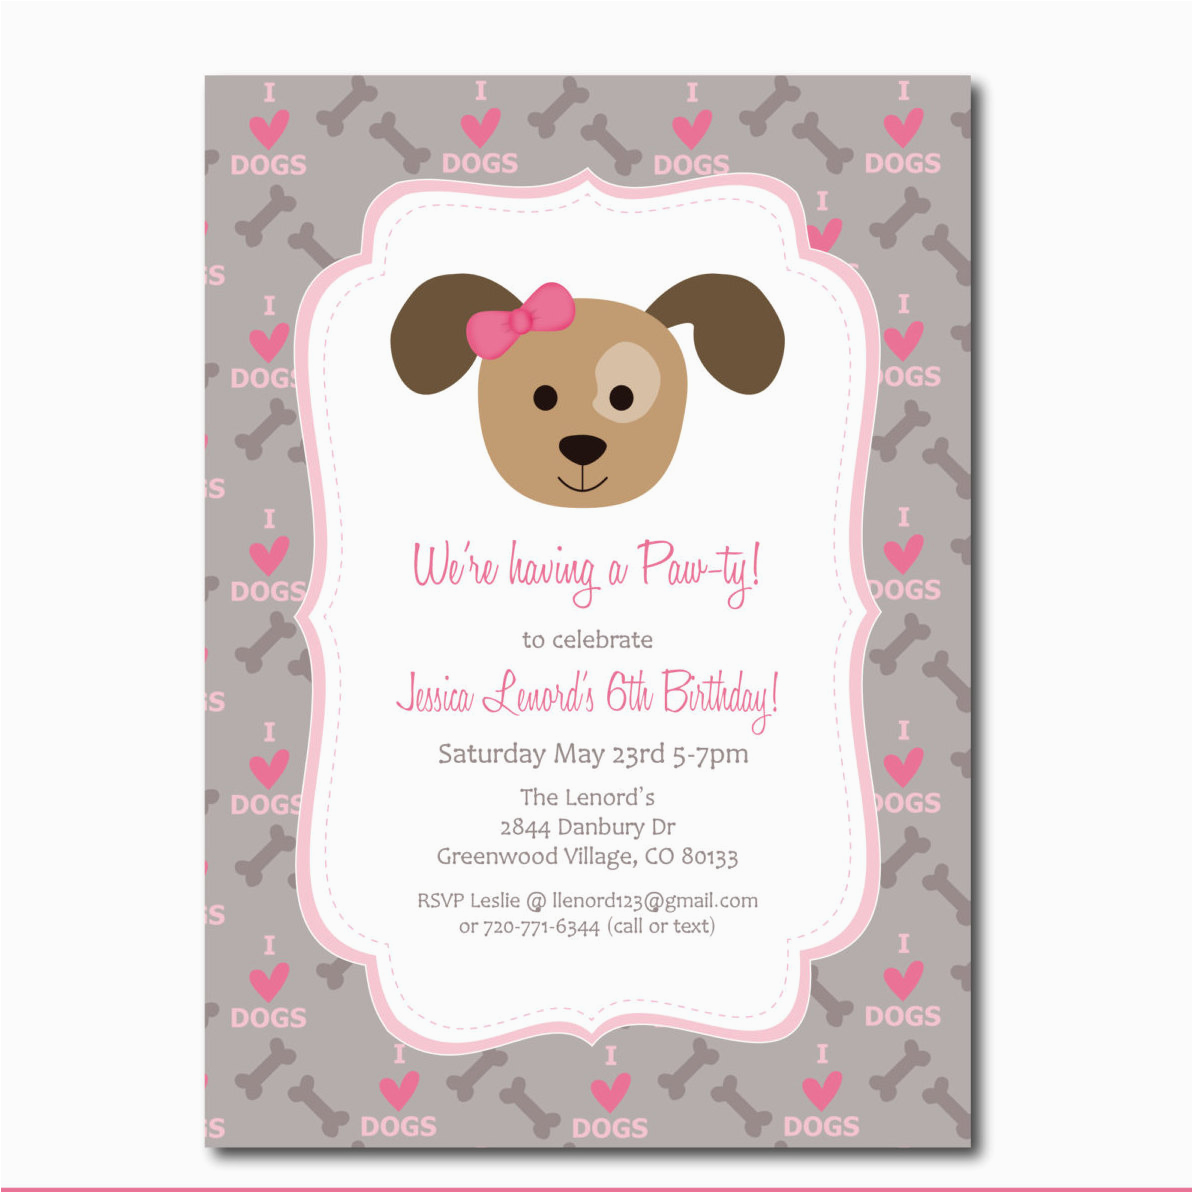 Dog Birthday Party Invitation Templates Puppy Party Invitation with Editable Text Dog Party